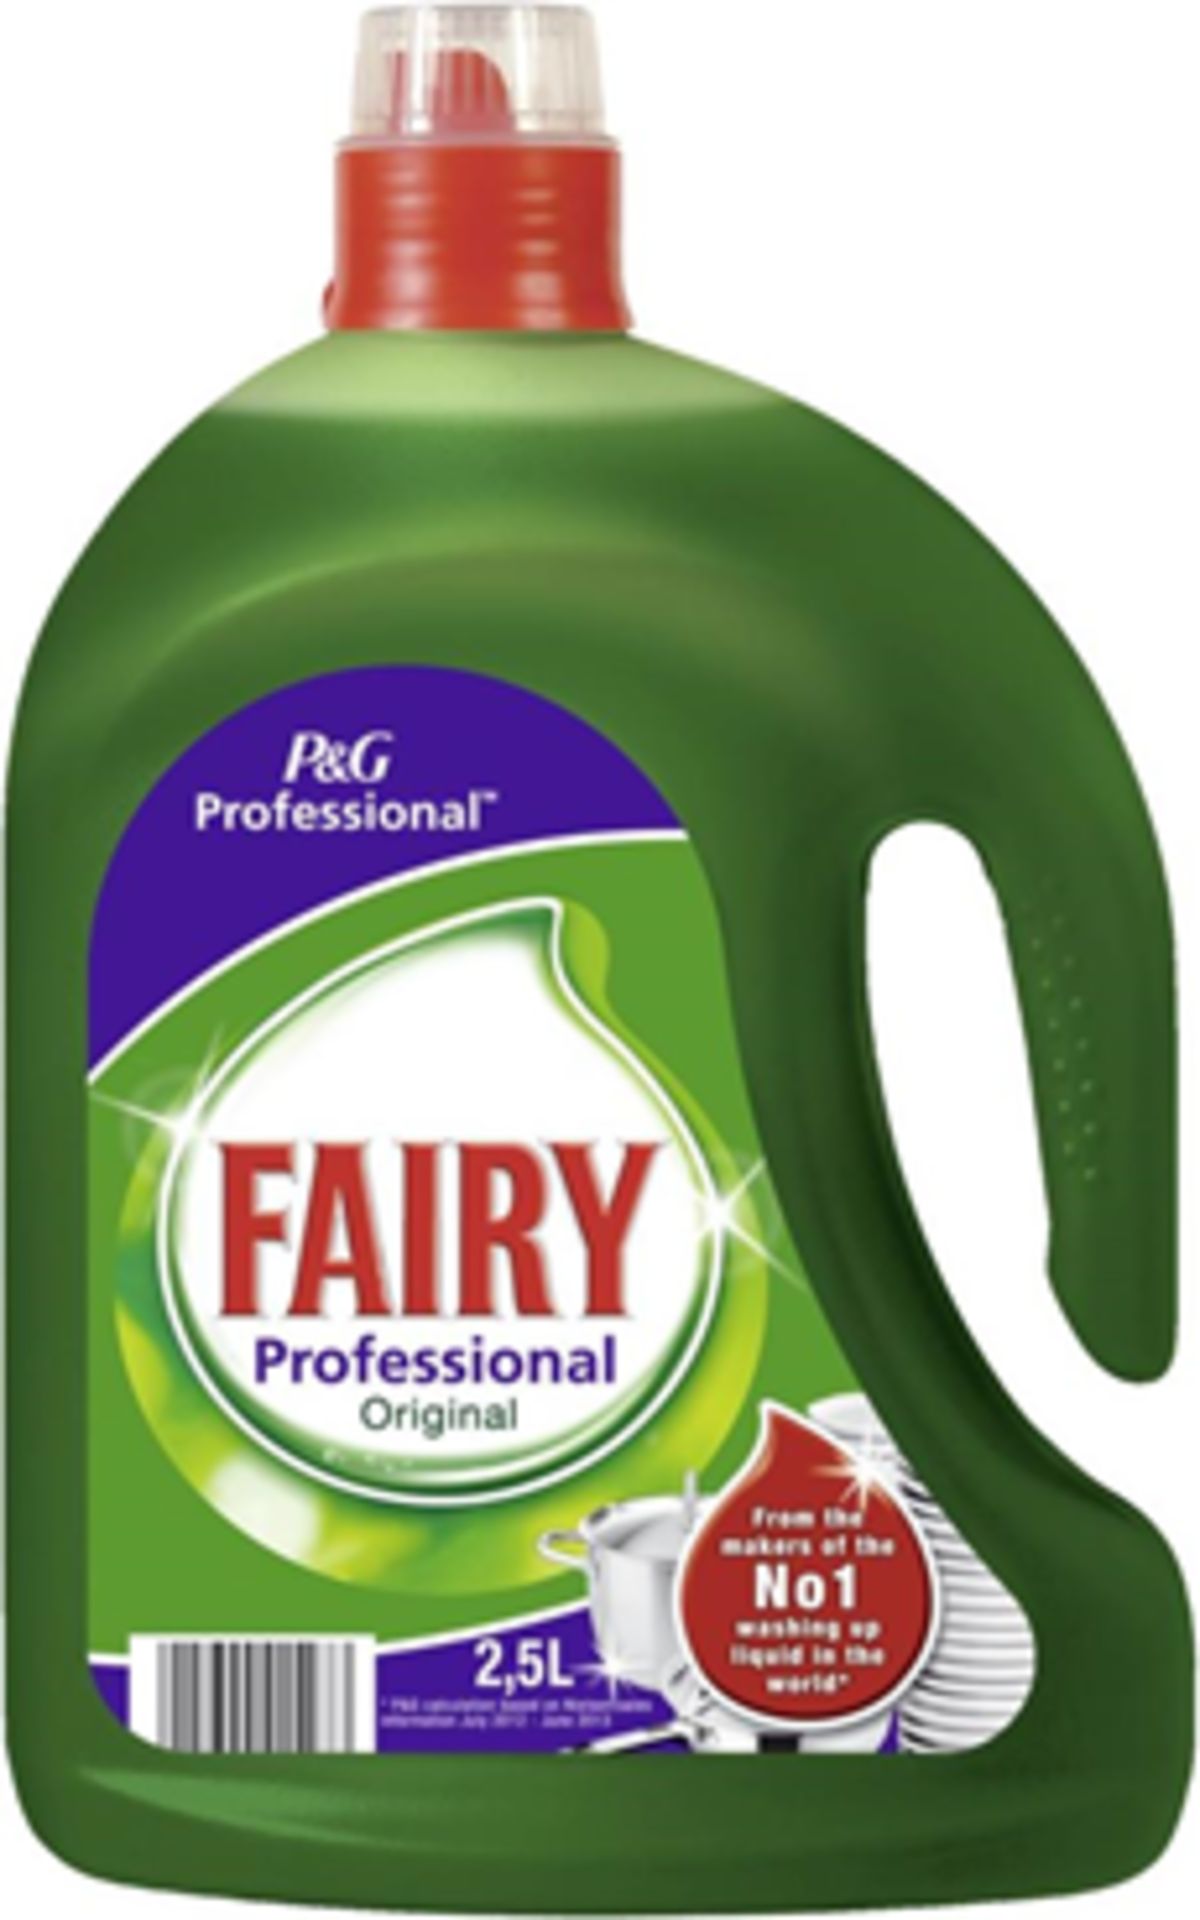 V *TRADE QTY* Brand New Fairy Professional Original 2.5litre Washing Up Liquid ISP£11.45 X 40 YOUR